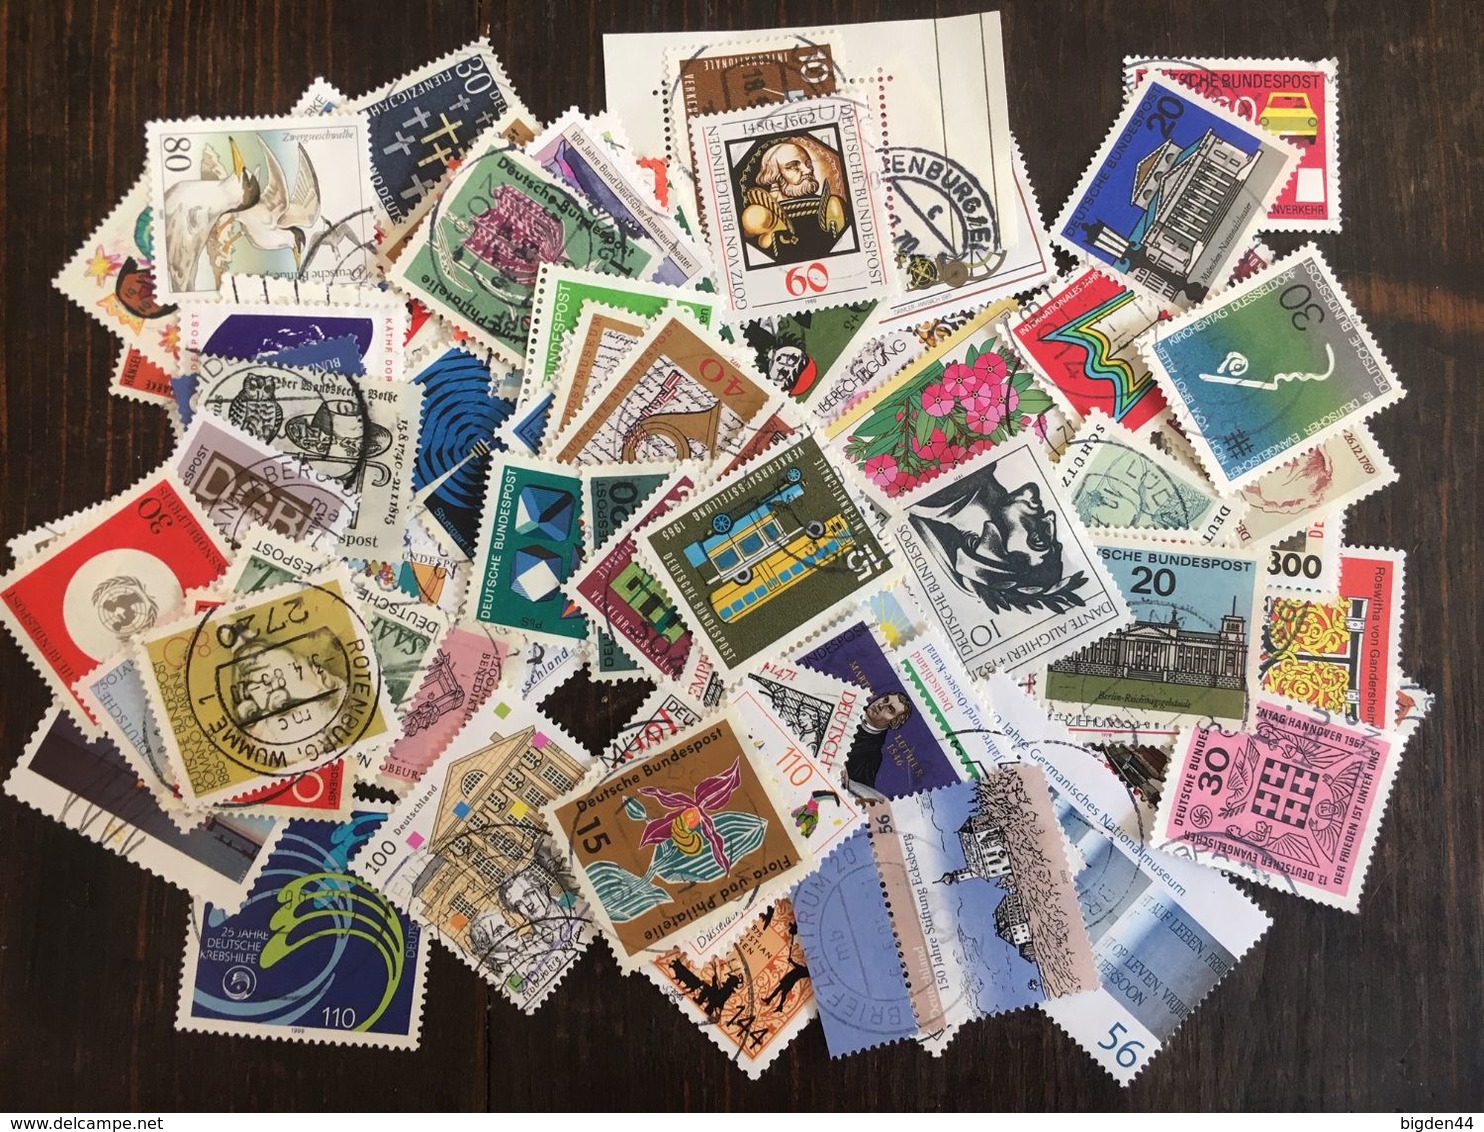 Lot 1000 timbres choisis chosen stamps Allemagne Deutschland Germany BRD